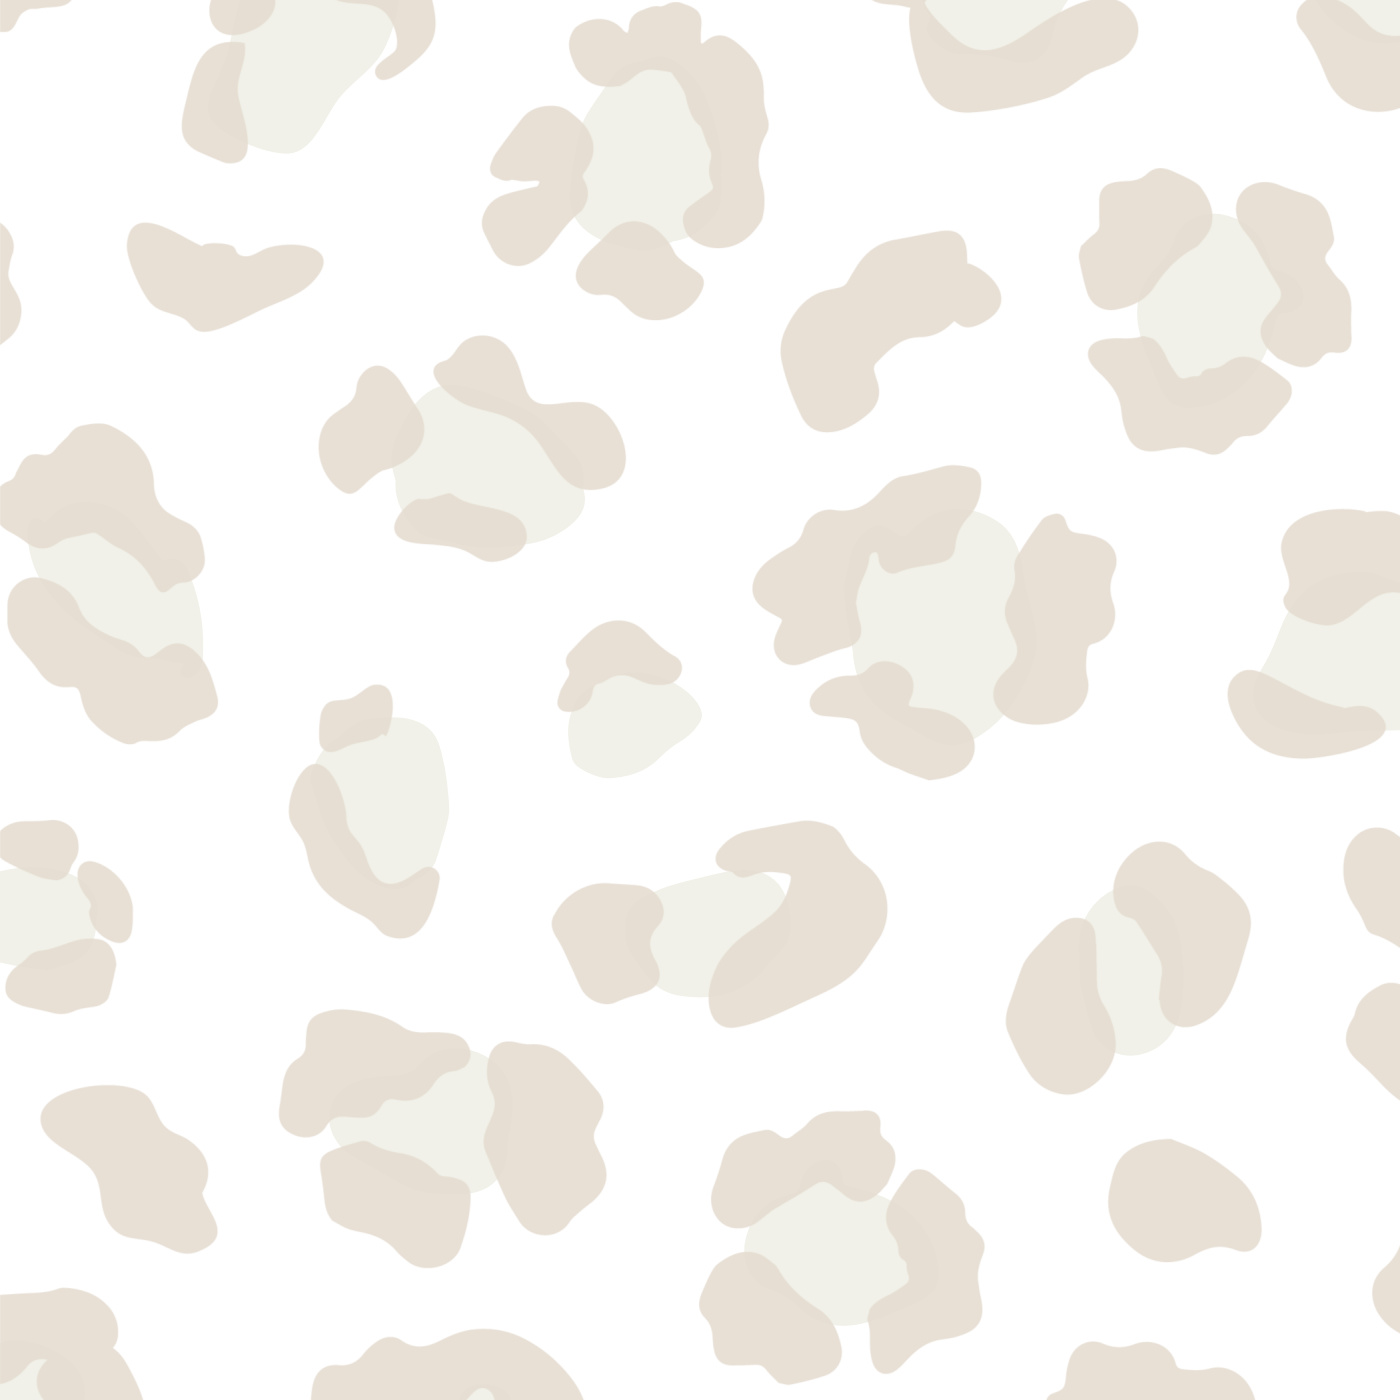 Leopard Print Fabric  Free photo on Pixabay  Pixabay